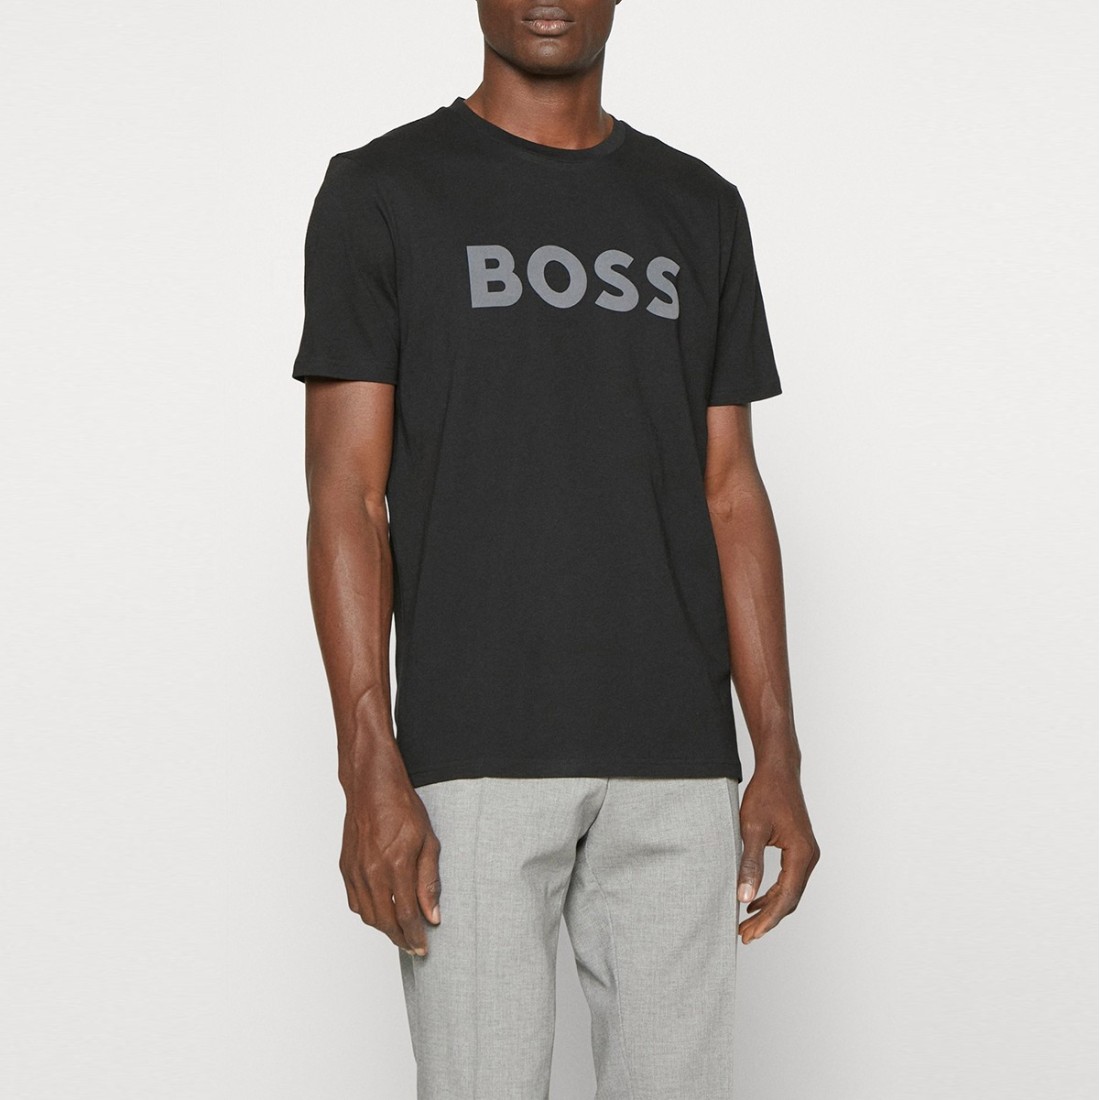 Image of BOSS - T-shirt Thinking - Colore: Nero,Taglia: XS